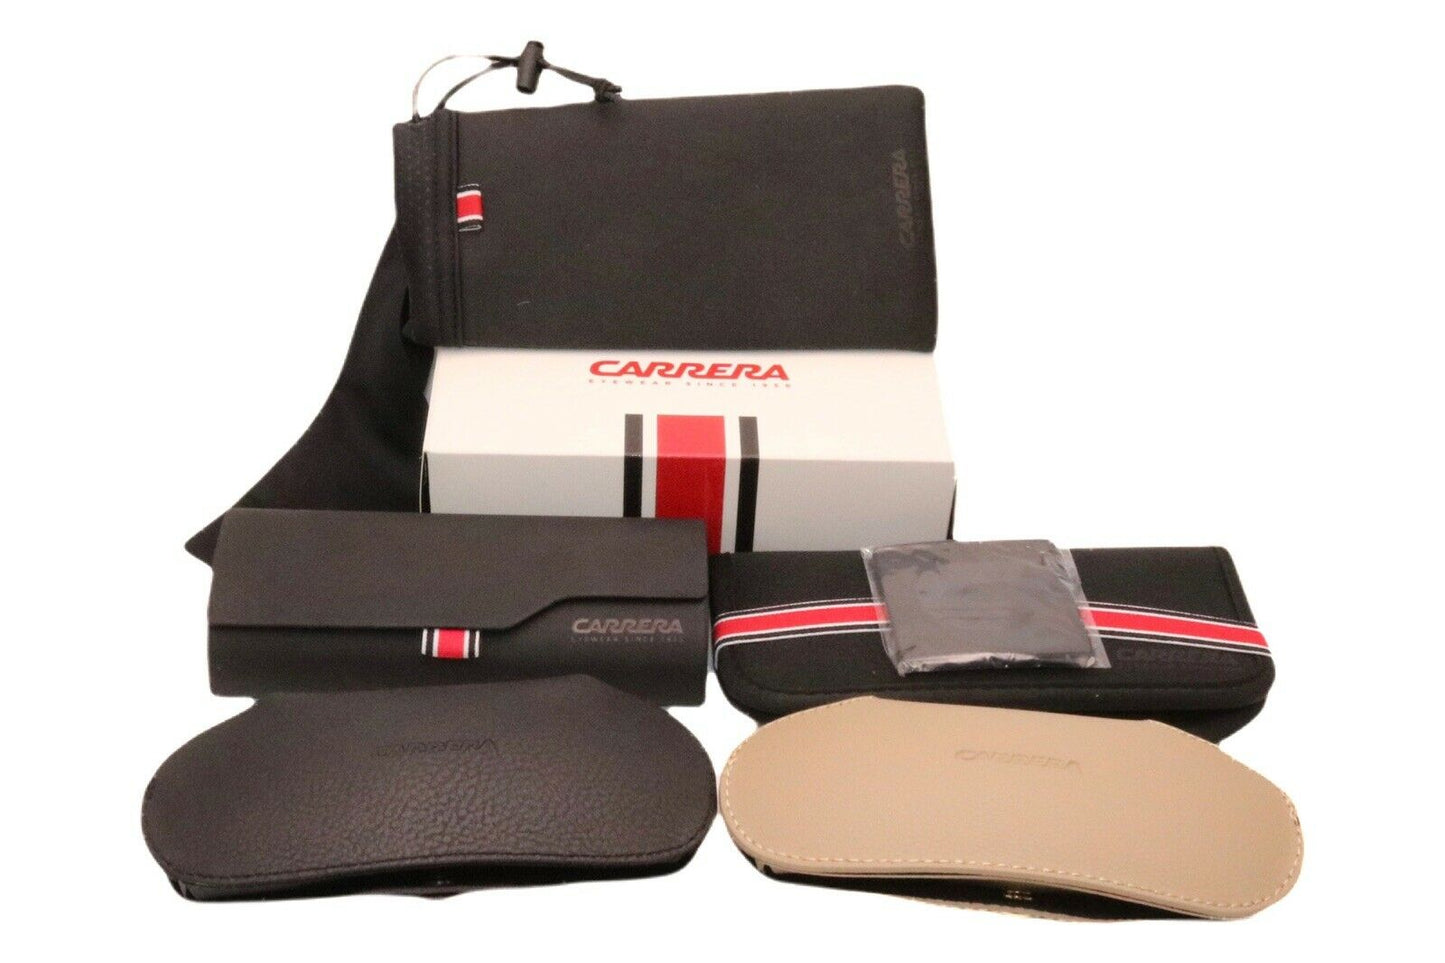 Carrera CARRERA 8872 0KB7 55 55mm New Eyeglasses